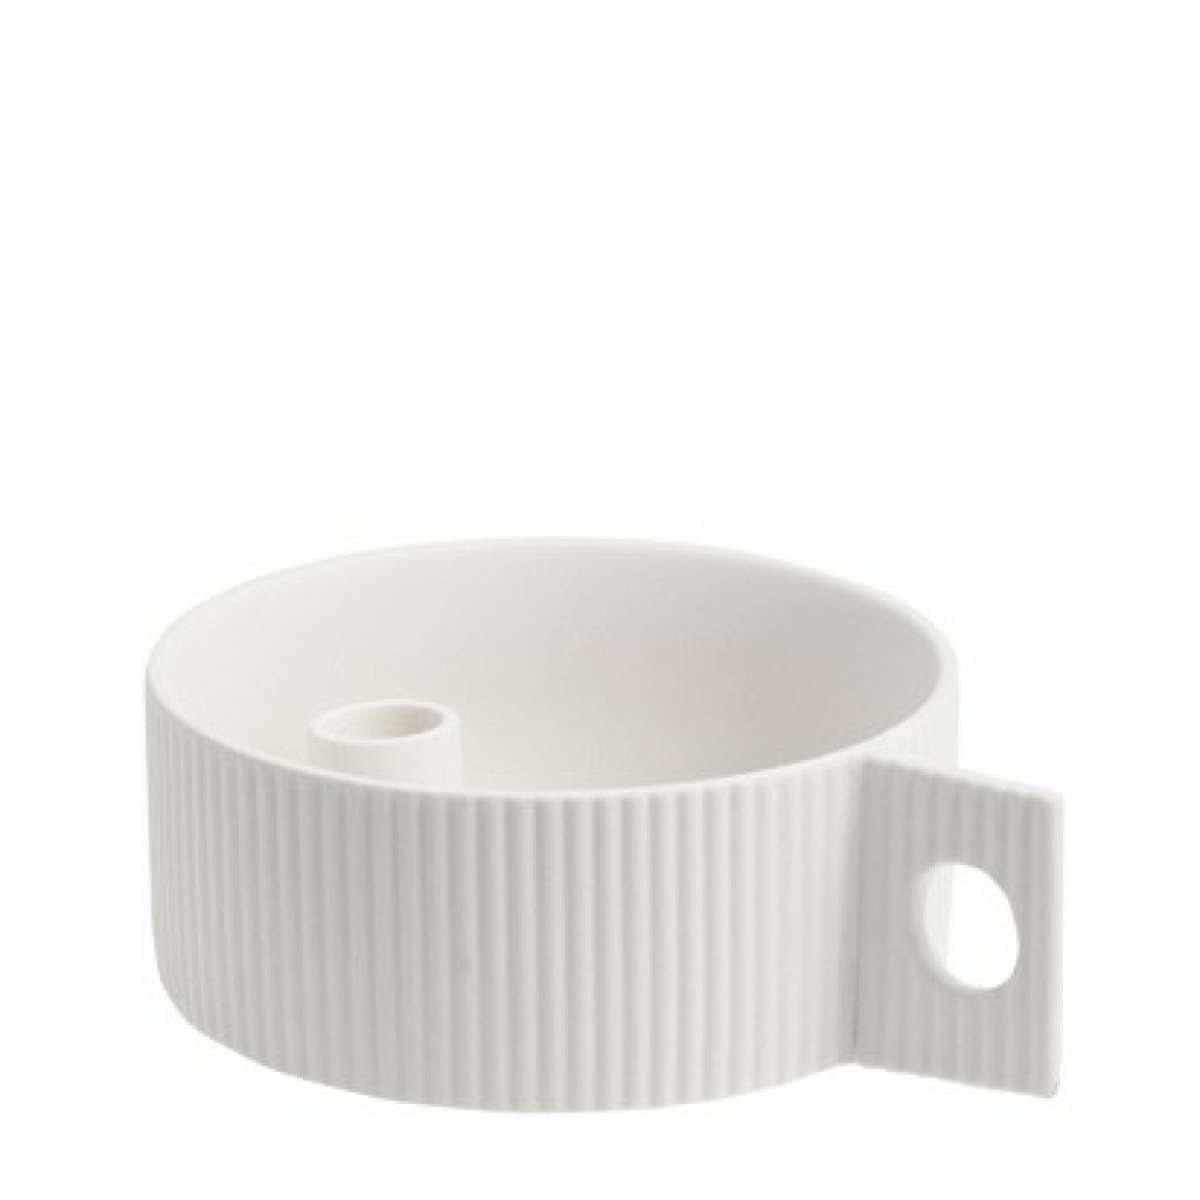 Immagine del prodotto Portacandela in Ceramica Opaca bianca Lidaby | Storefactory